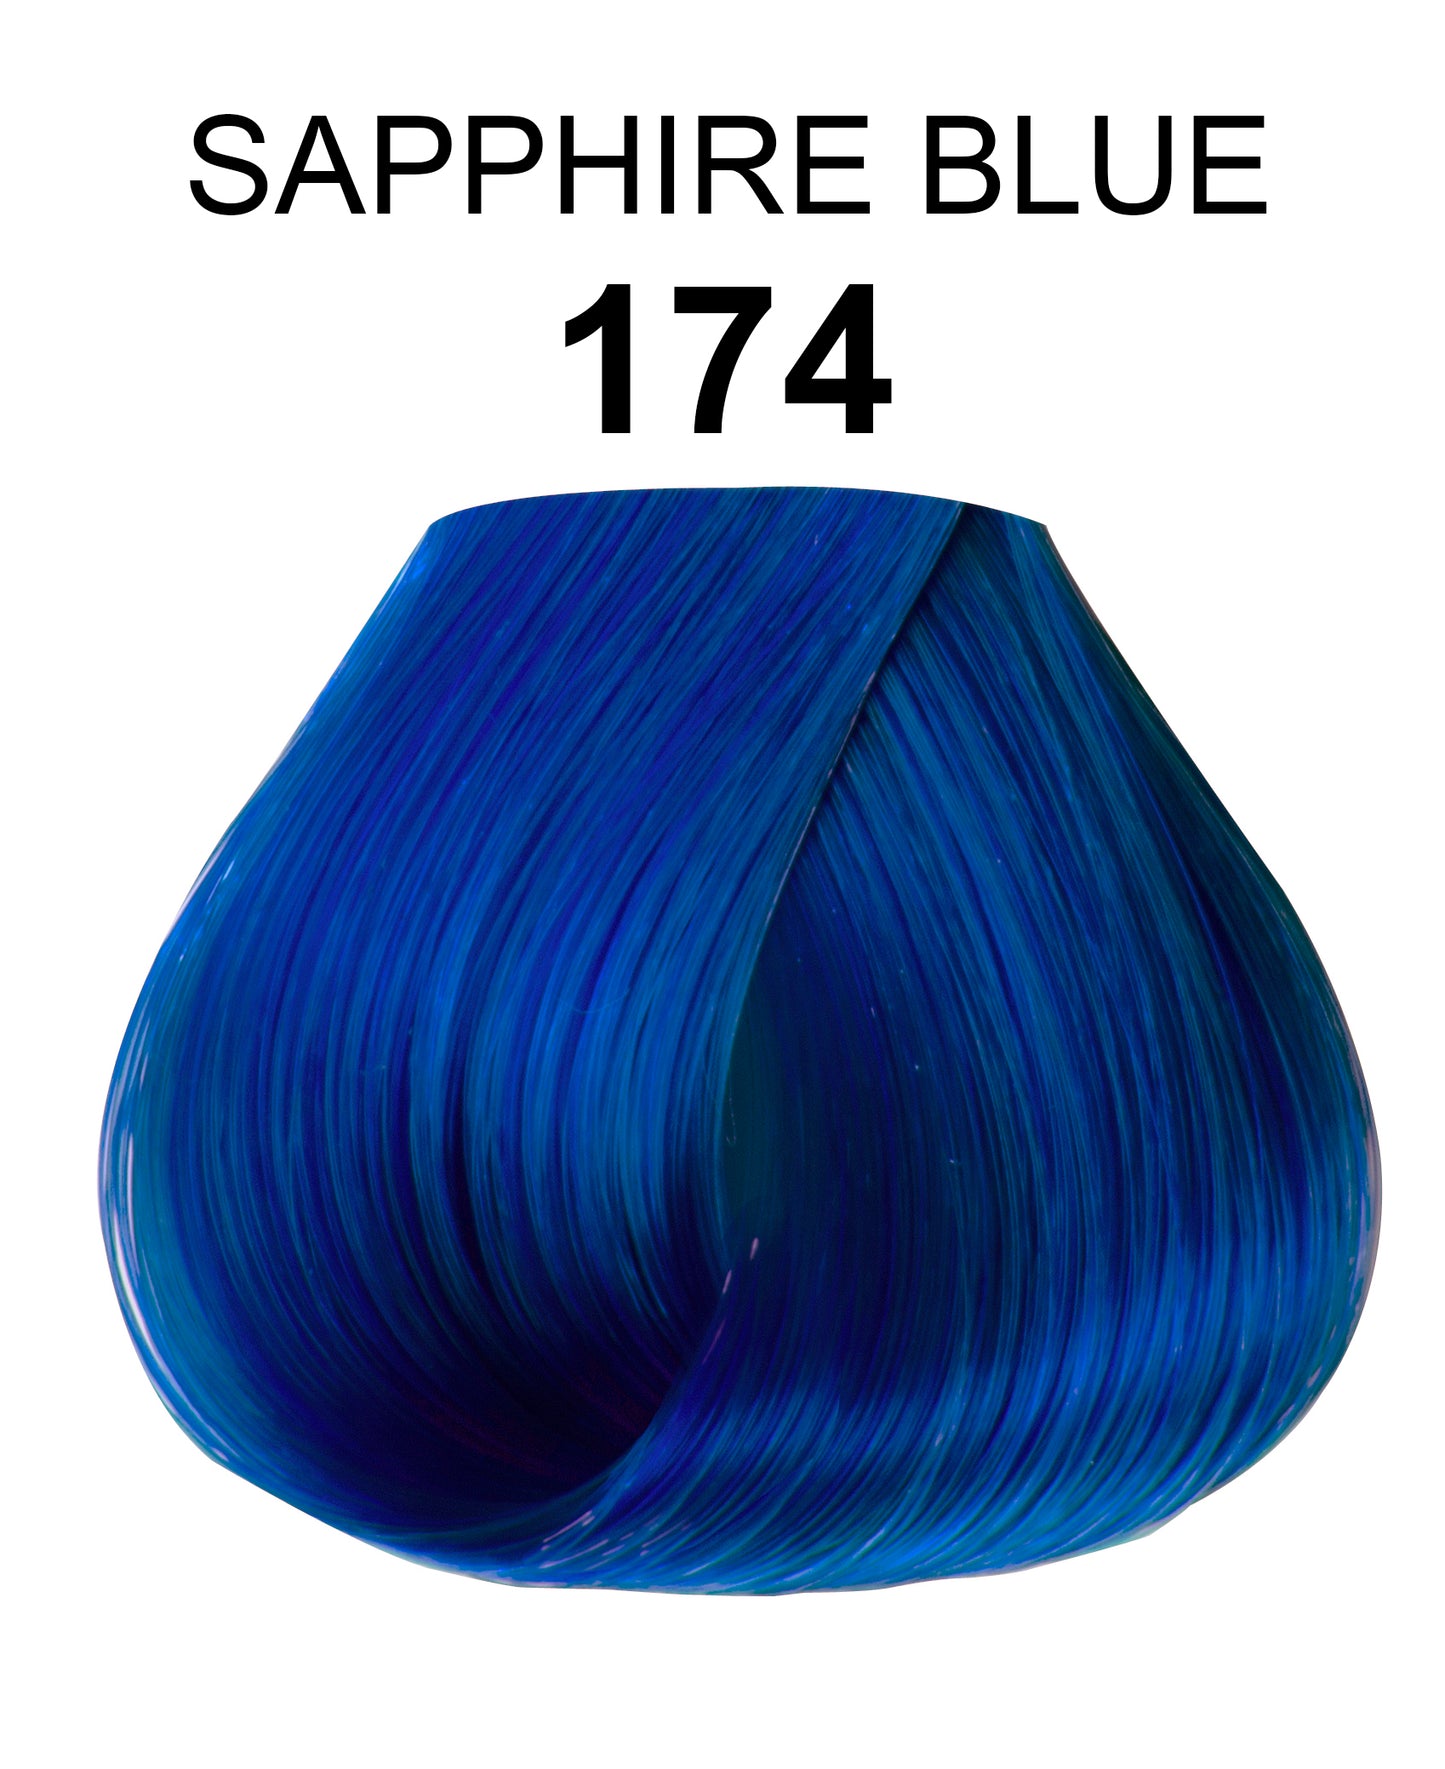 Adore #174 Sapphire Blue